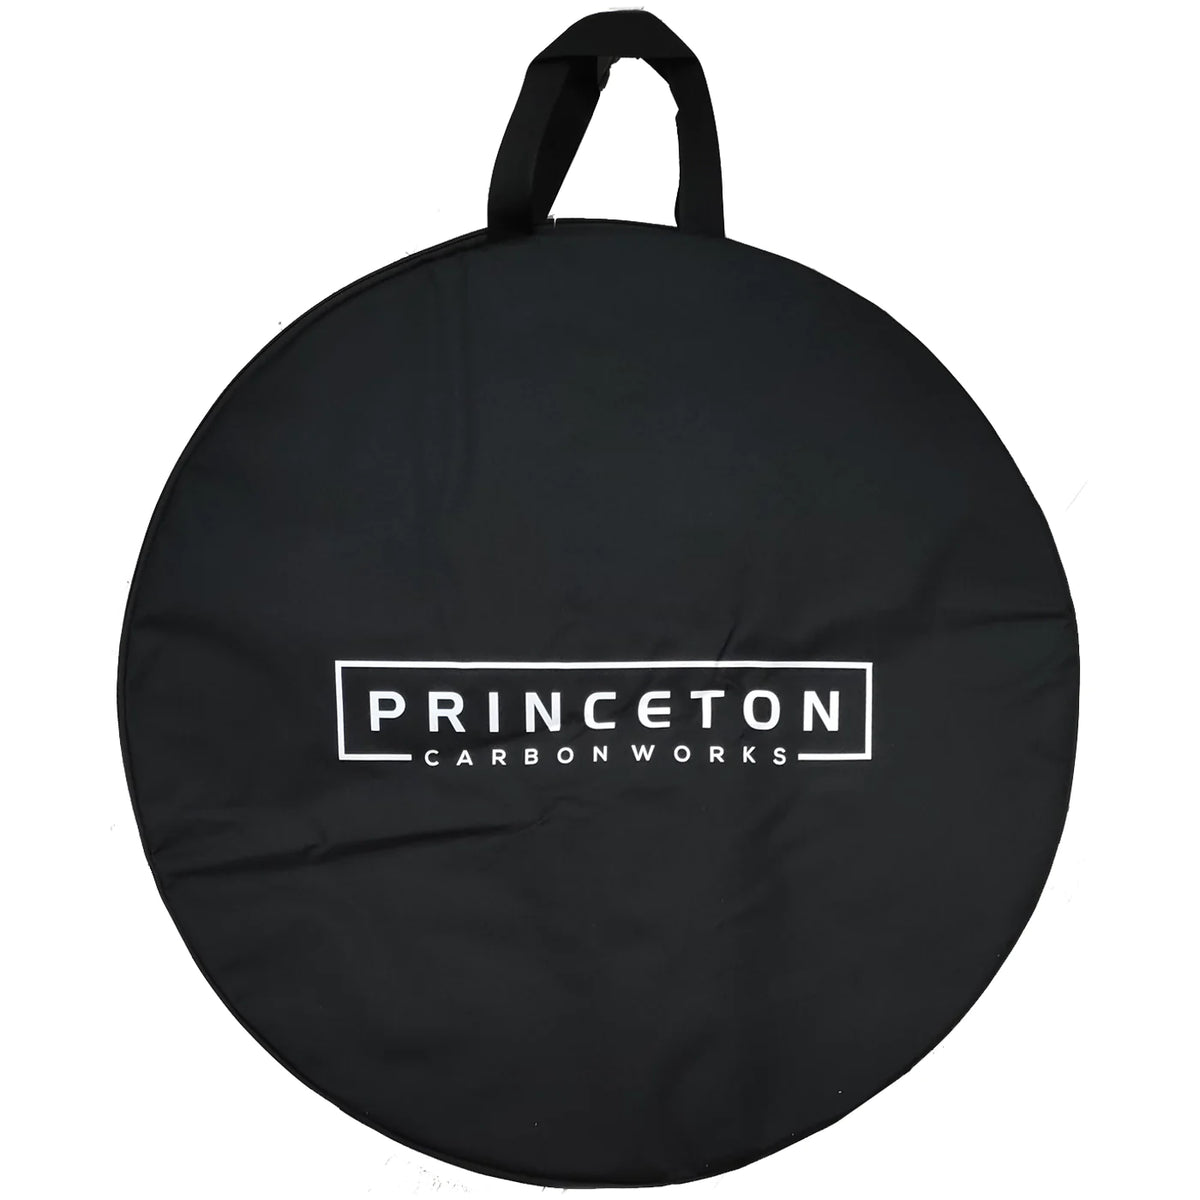 PRINCETON Milano 2.0 Series Diapers Bag - BLACK / MAROON / NAVY BLUE -  YouTube